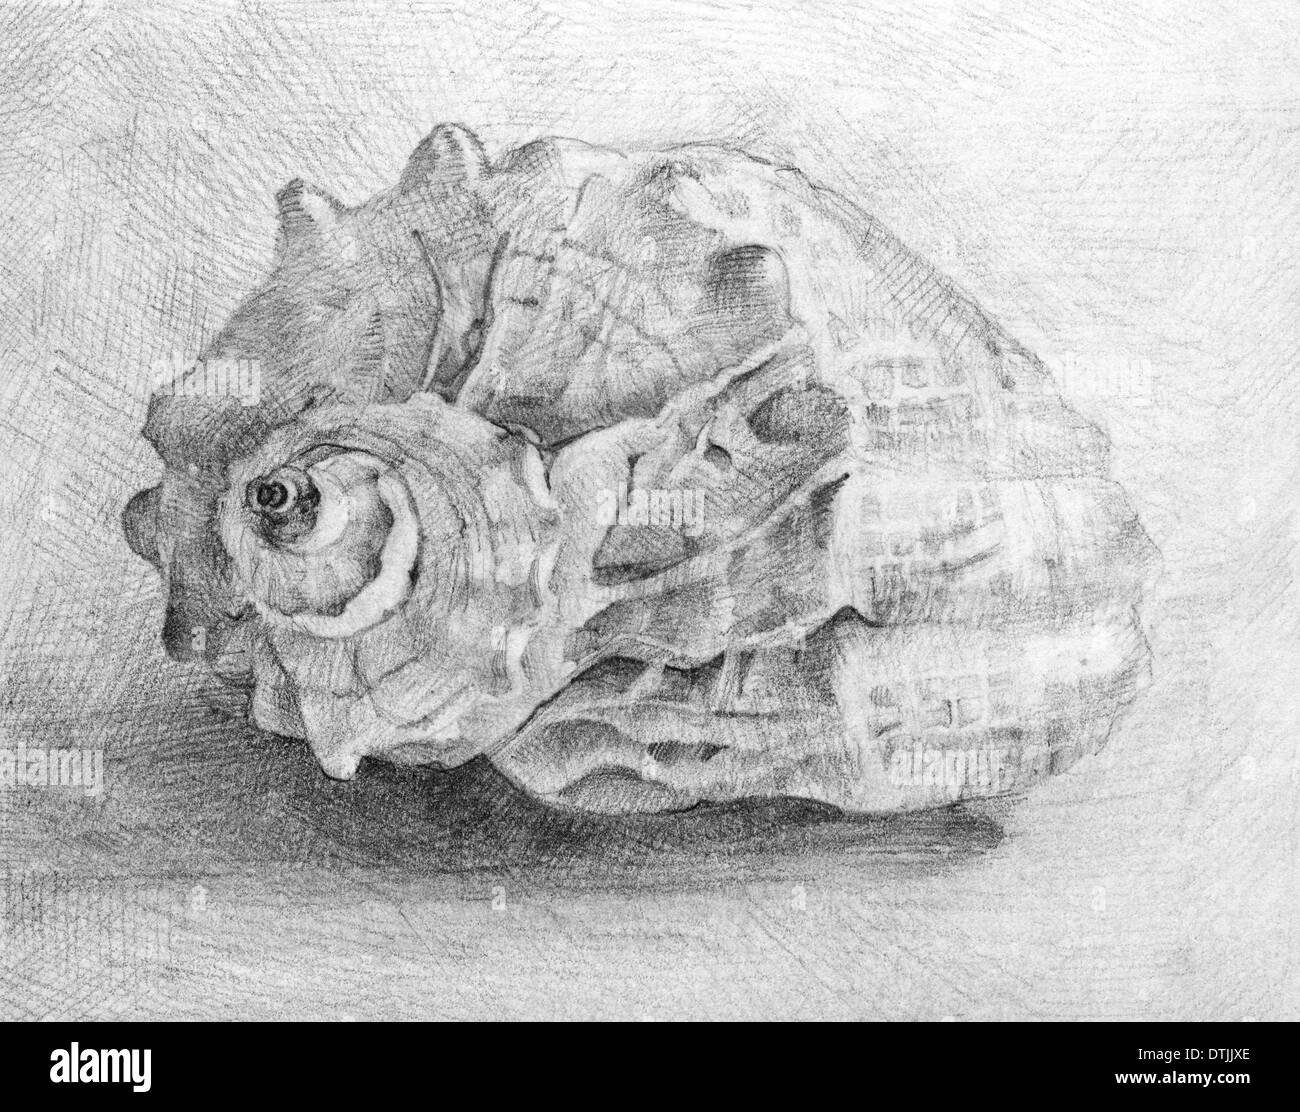 Set Sea Shells Simple Pencil Drawing Stock Illustration 1639699051   Shutterstock